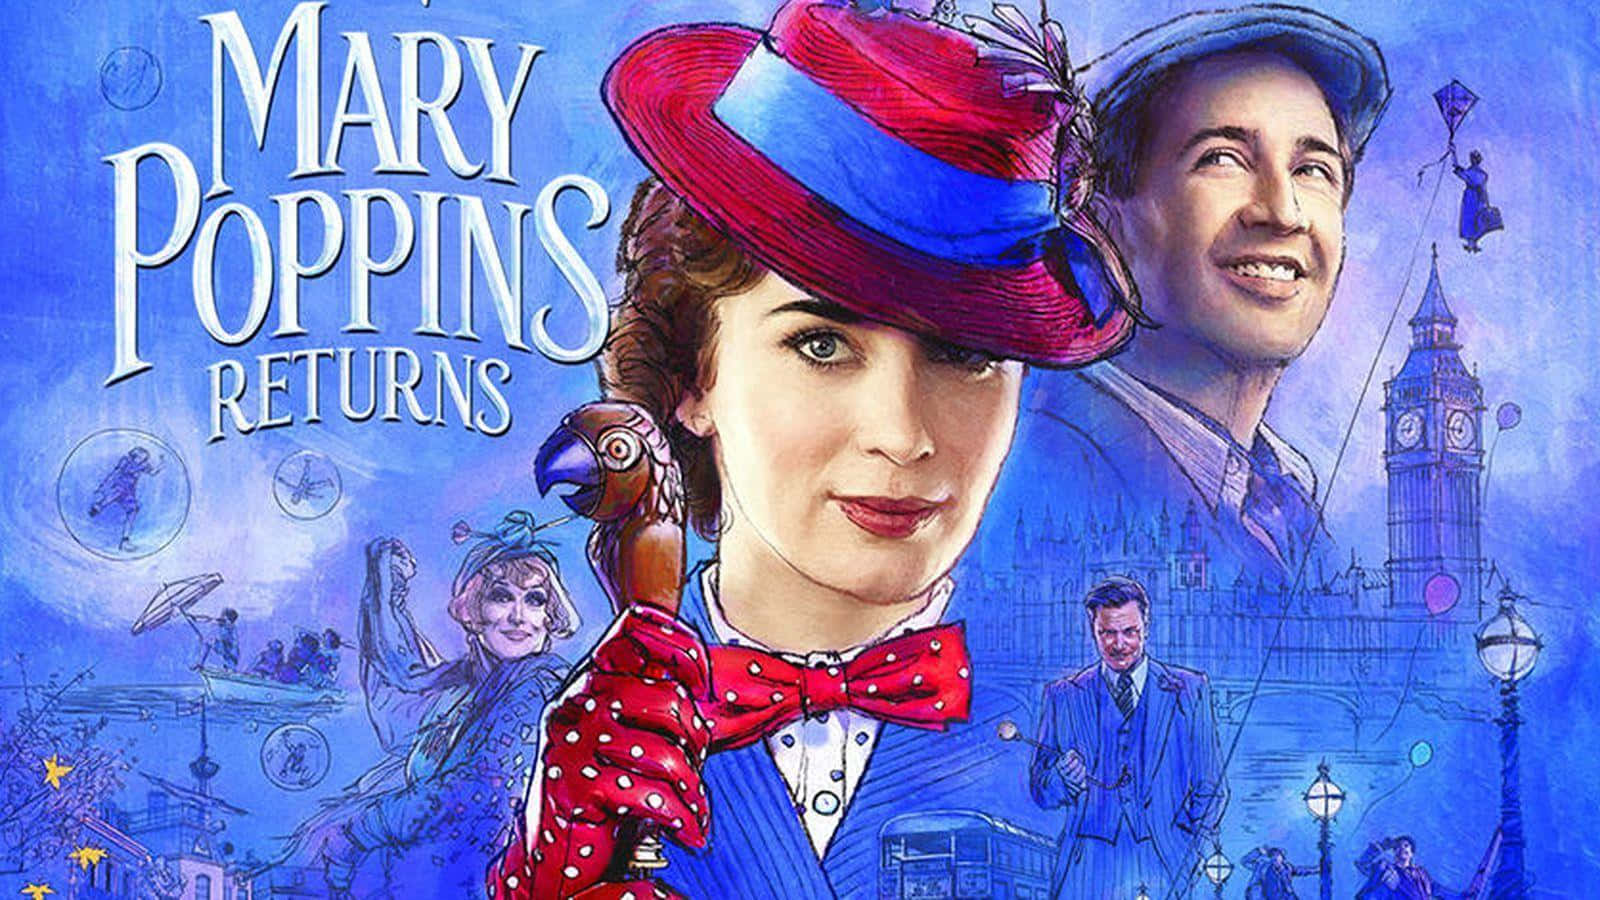 Caption: Mary Poppins Soaring Over London